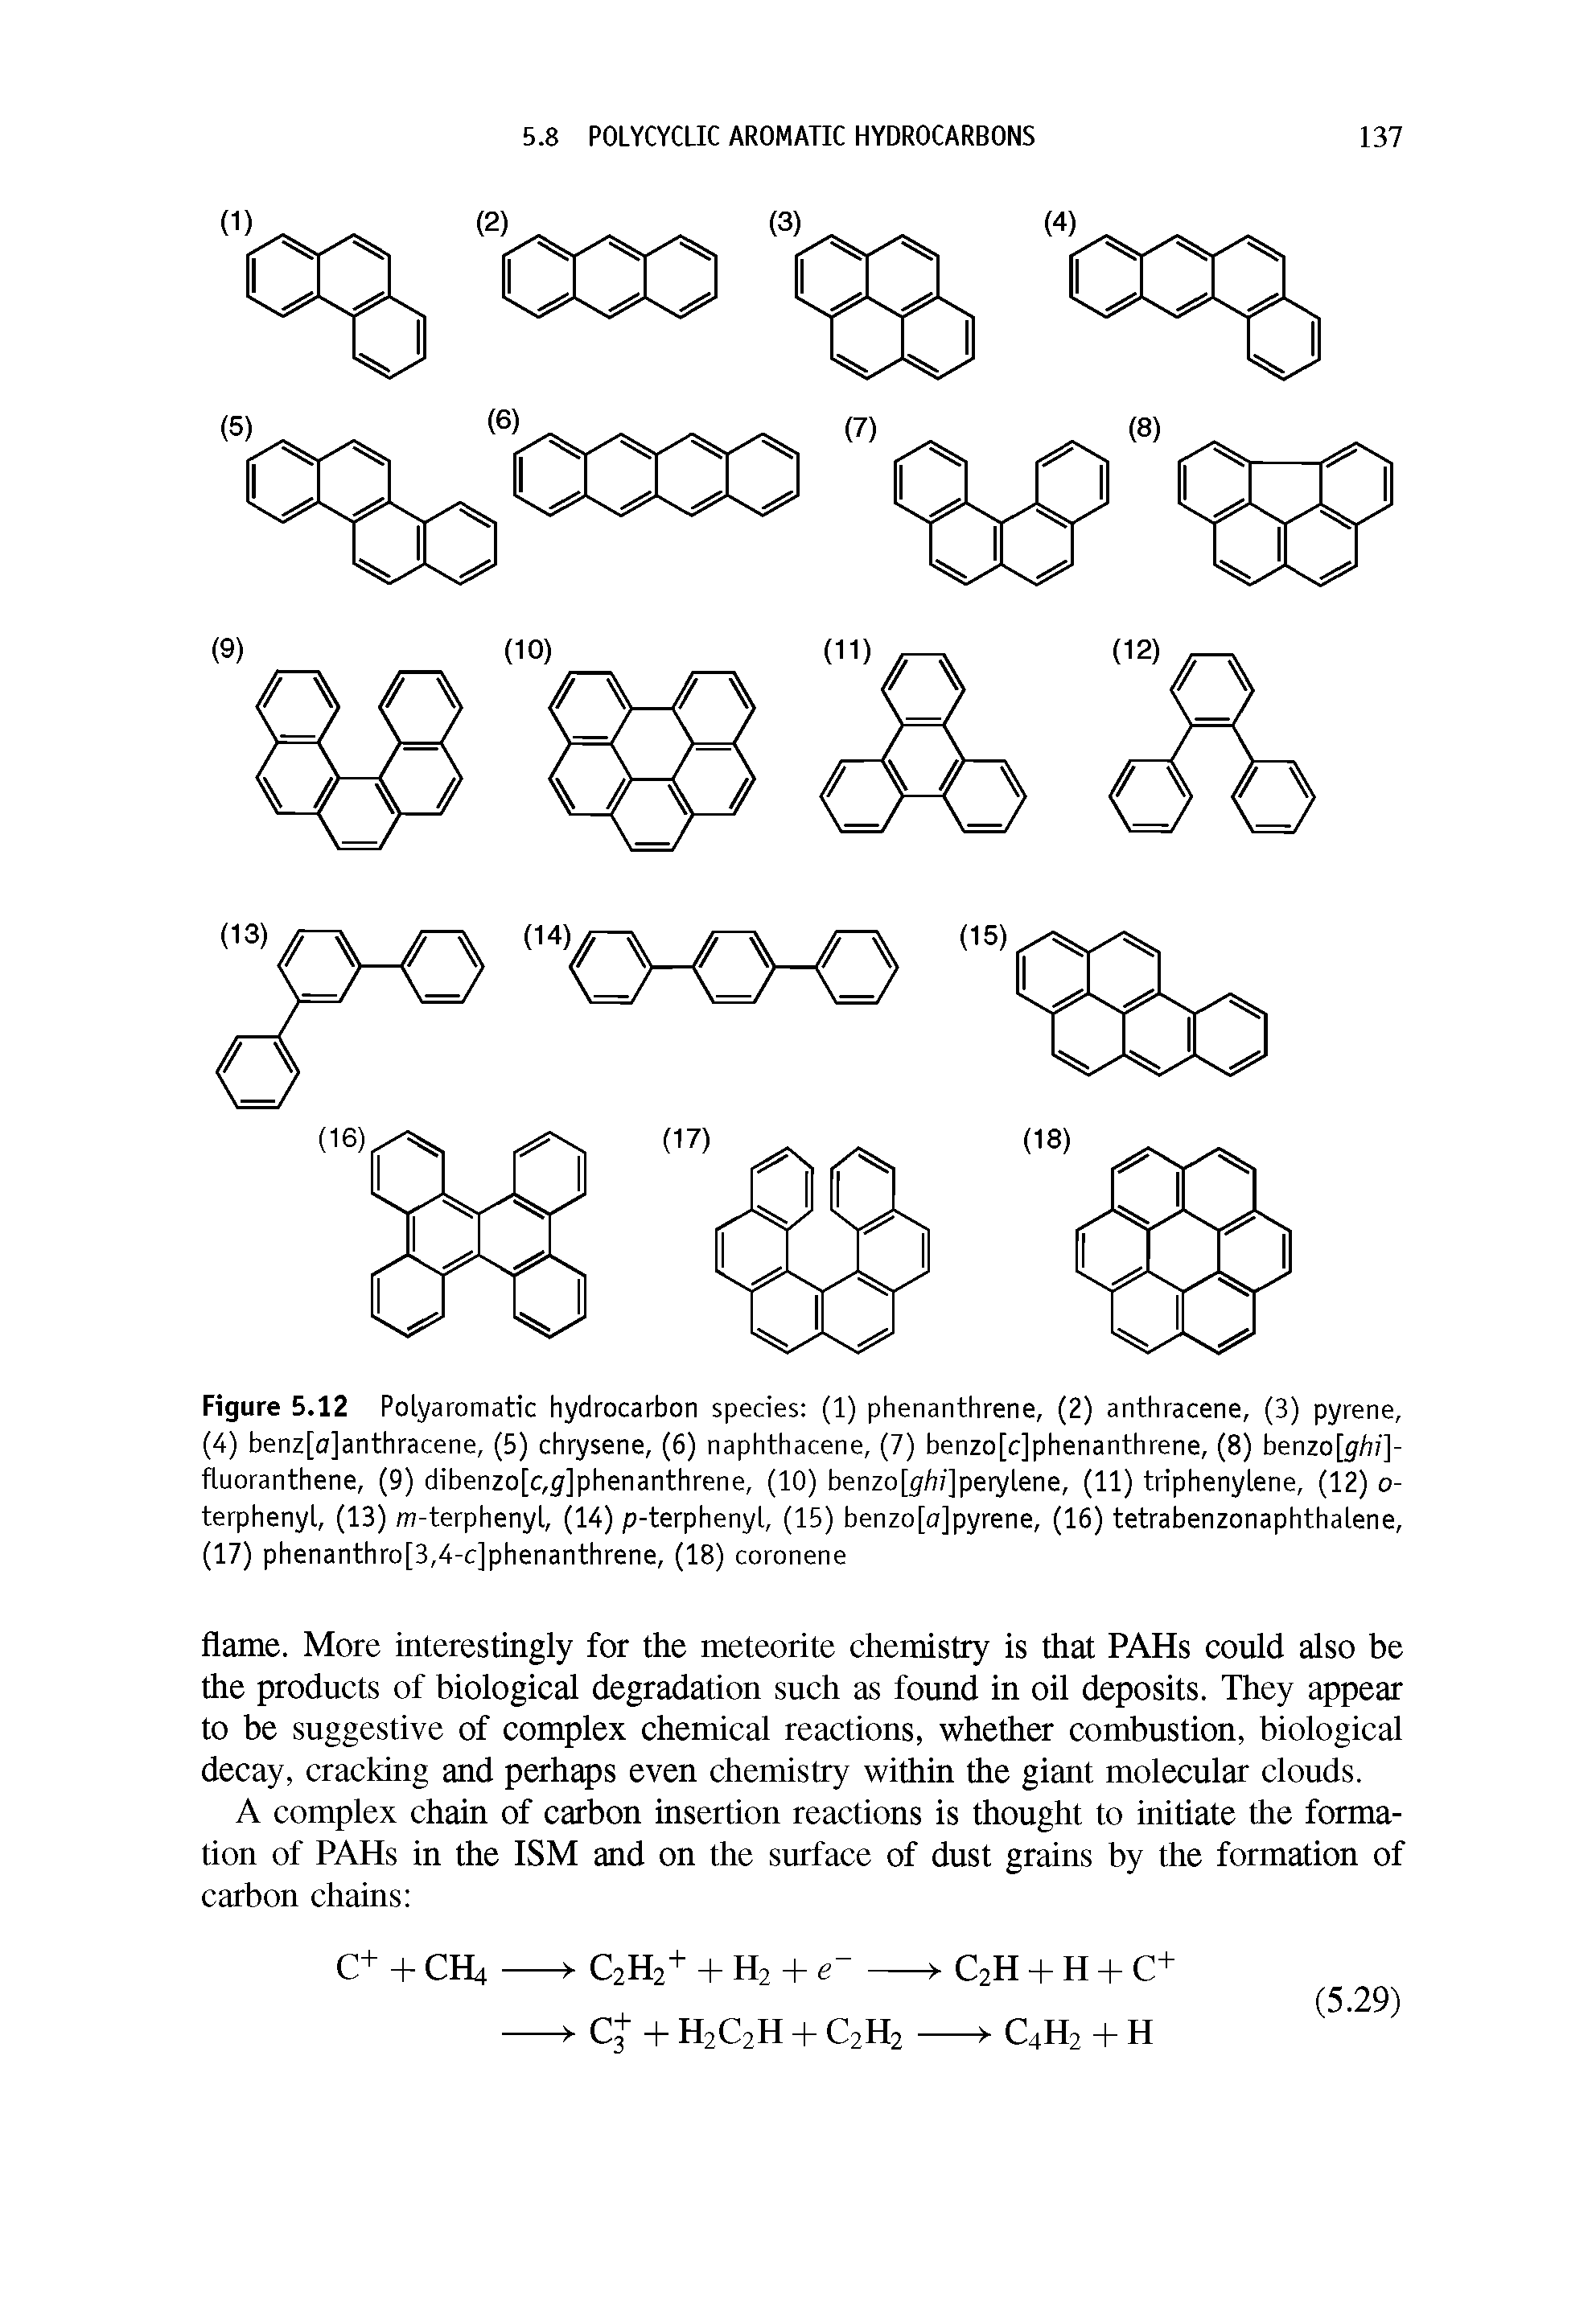 Figure 5.12 Polyaromatic hydrocarbon species (1) phenanthrene, (2) anthracene, (3) pyrene, (4) benz[o]anthracene, (5) chrysene, (6) naphthacene, (7) benzo[c]phenanthrene, (8) benzo[ghi] fluoranthene, (9) dibenzo[c,g]phenanthrene, (10) benzo[g/ ]perylene, (11) triphenylene, (12) o-terphenyl, (13) m-terphenyl, (14) p-terphenyl, (15) benzo[o]pyrene, (16) tetrabenzonaphthalene, (17) phenanthro[3,4-c]phenanthrene, (18) coronene...